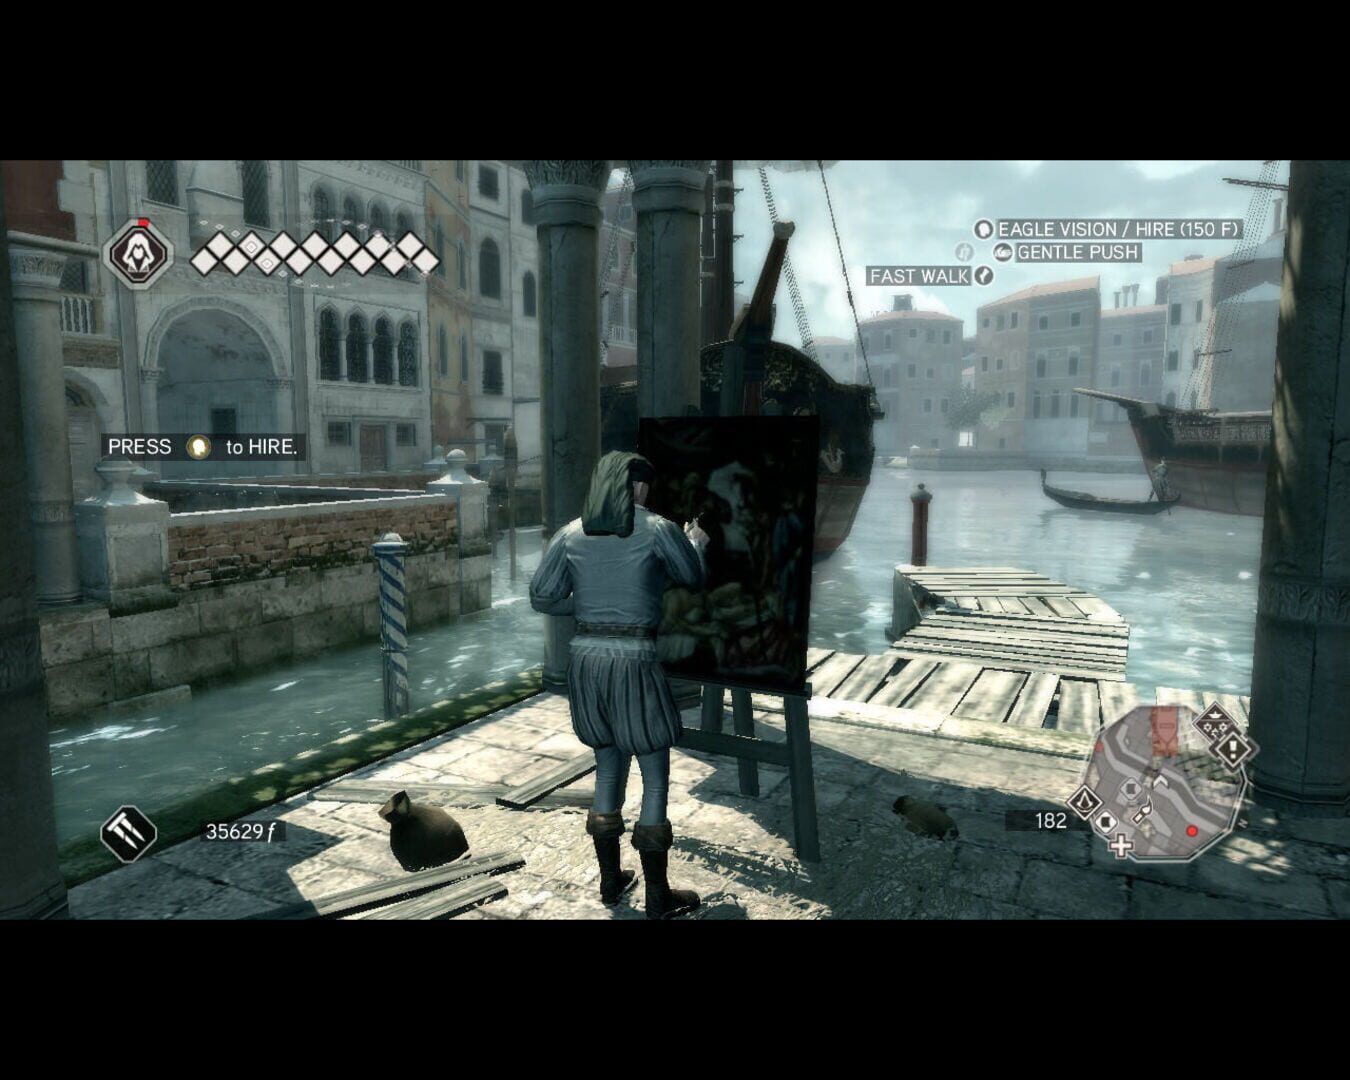 Captura de pantalla - Assassin's Creed: Heritage Collection